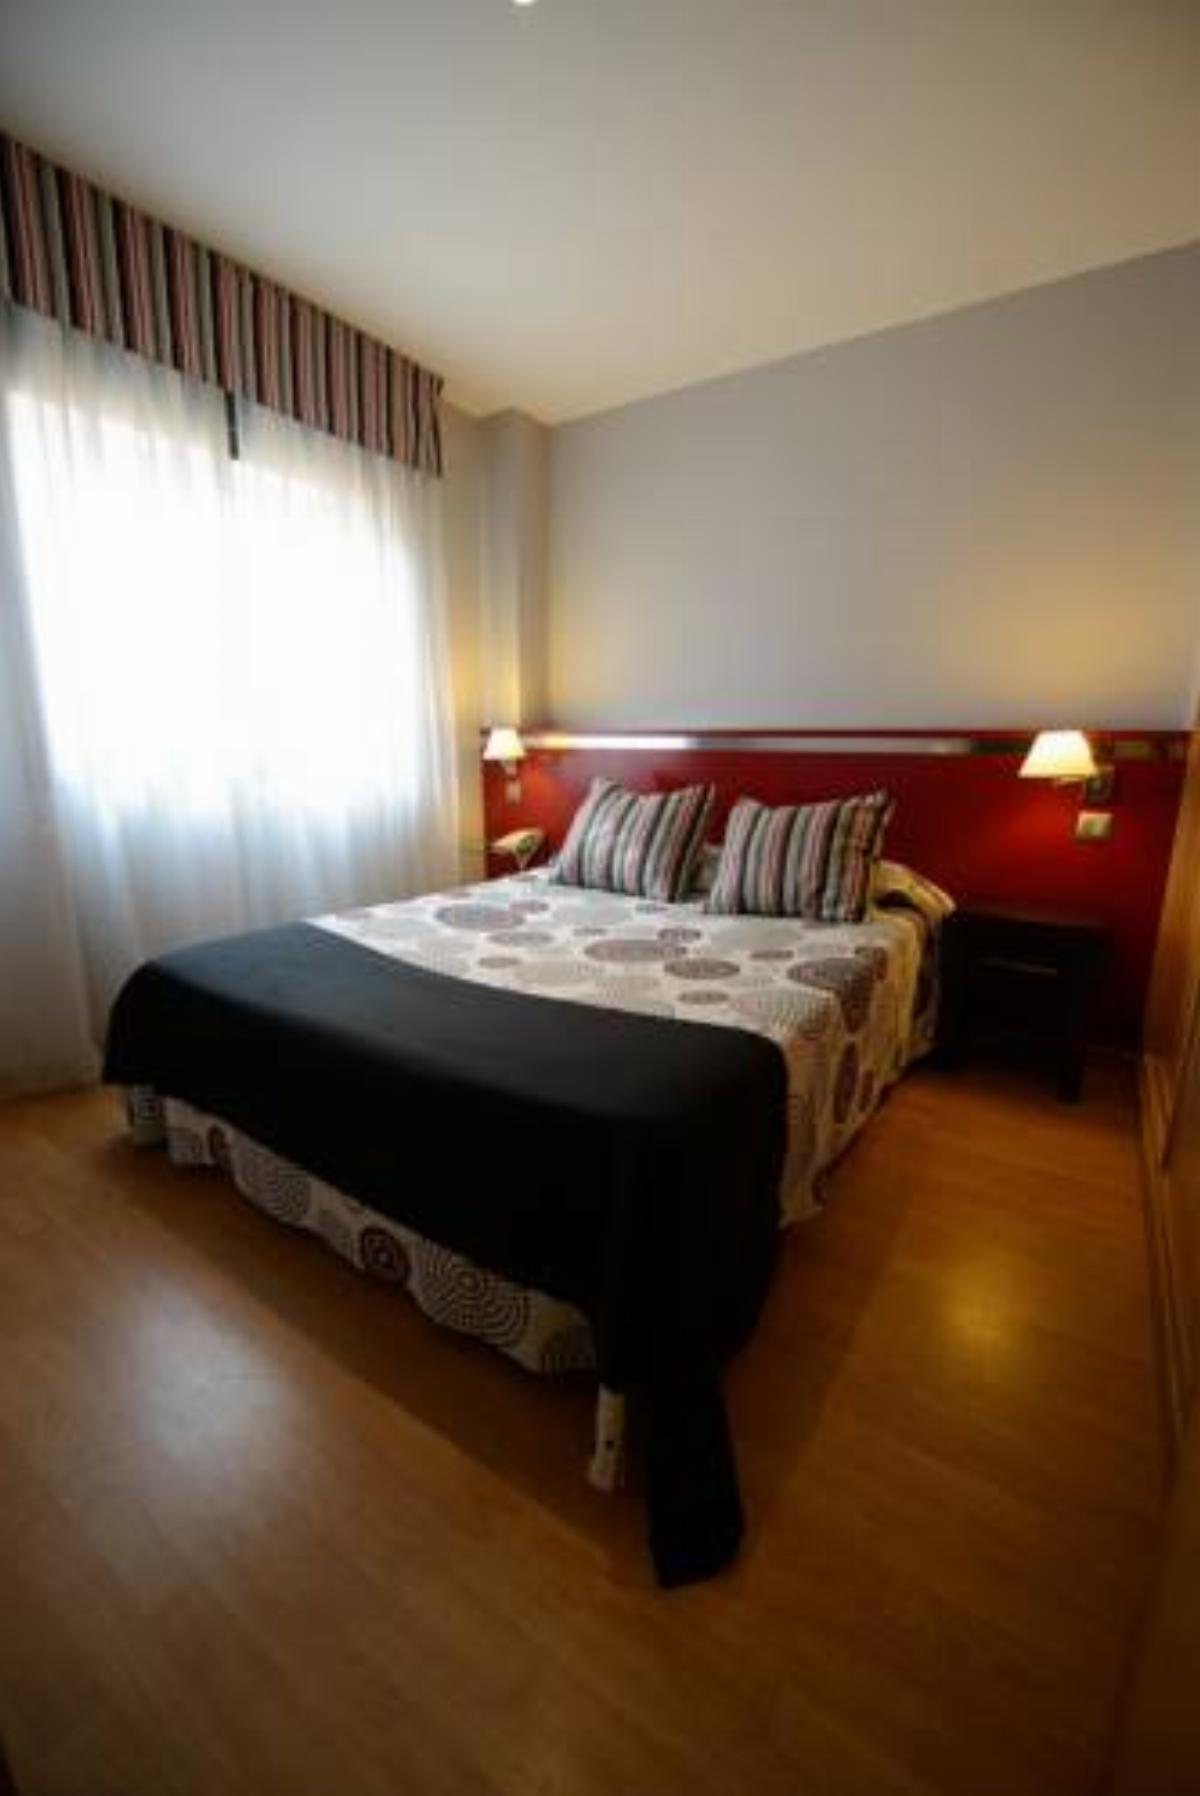 ApartHotel Ascarza Badajoz Hotel Badajoz Spain